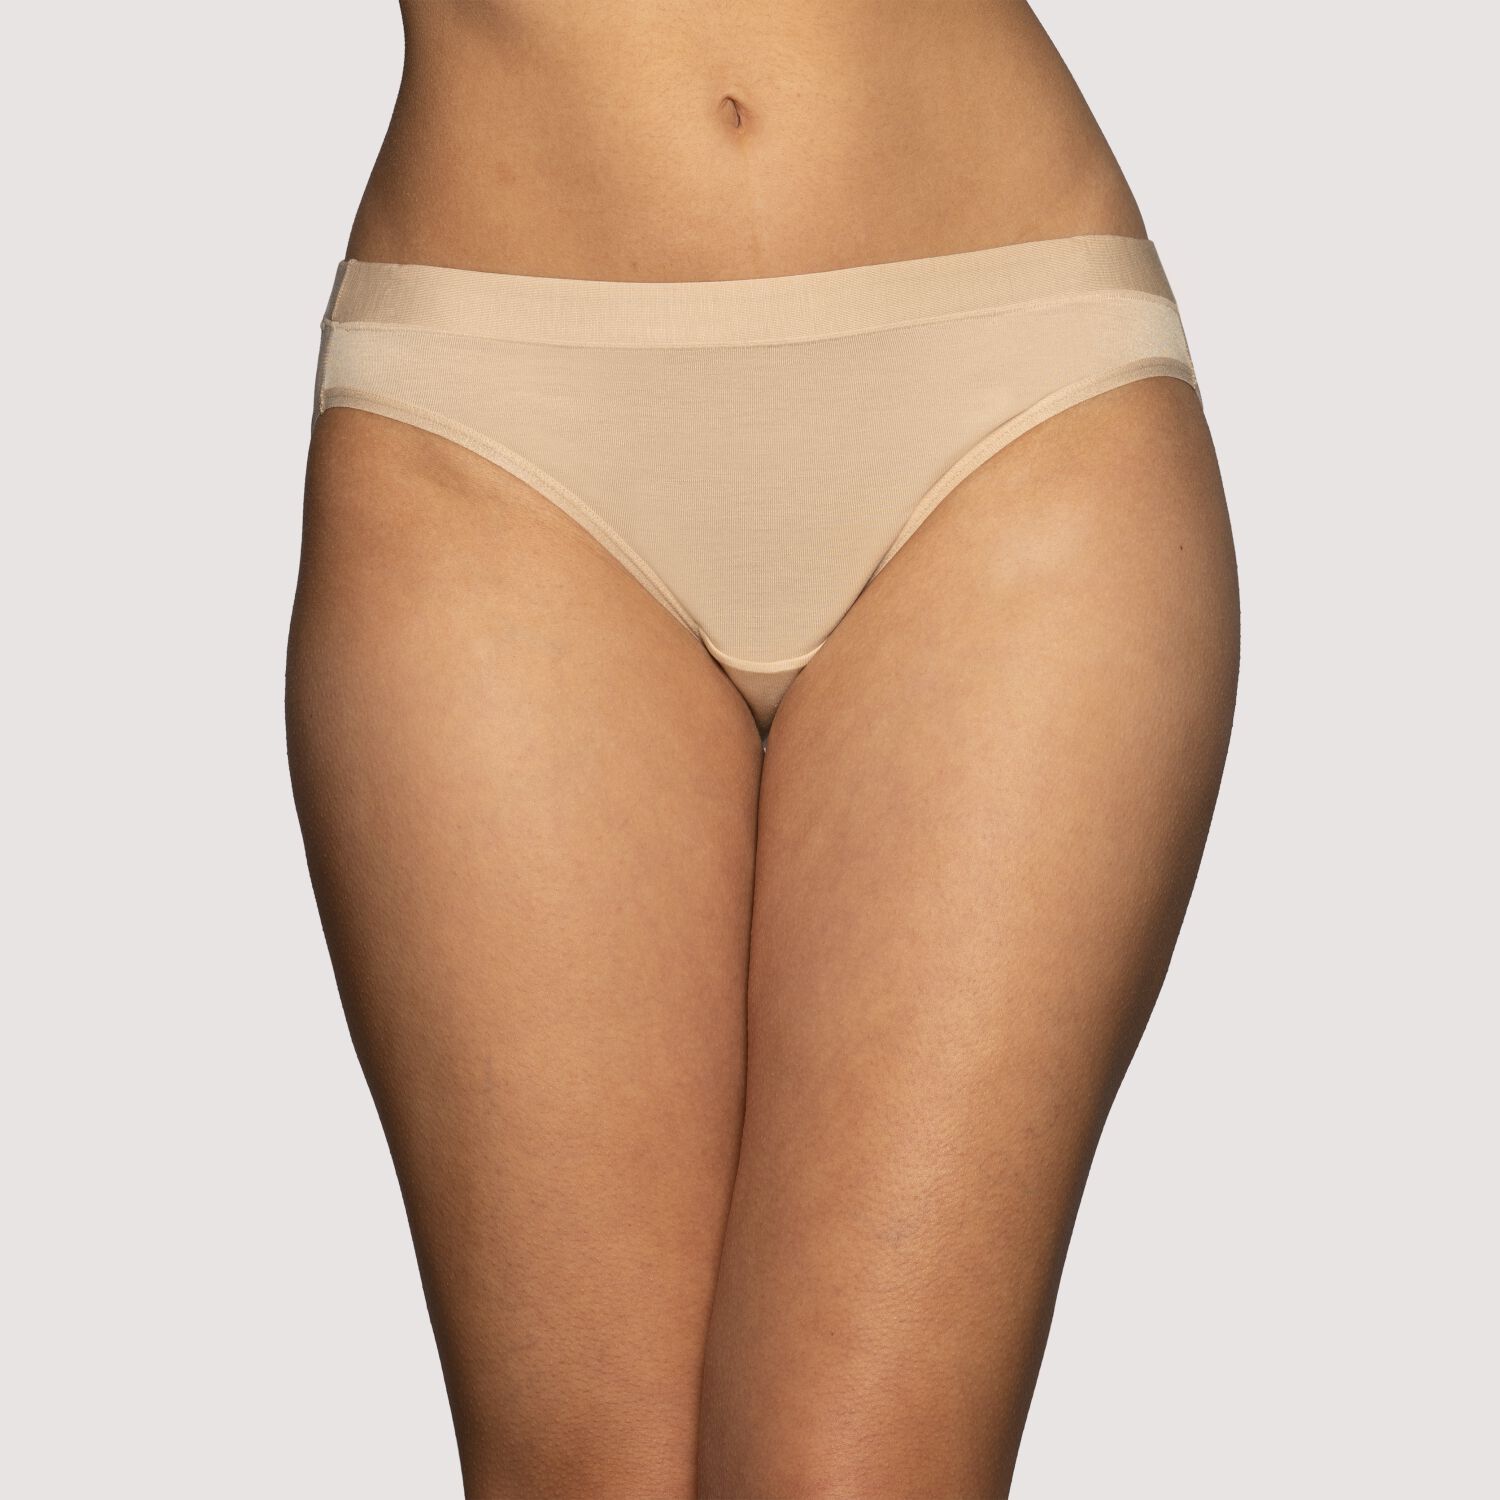 Buy QSN STUFF Woman Spanex Lace stocking (Beige-Beige, Size Fit M-XXXL, Set  of 2) at